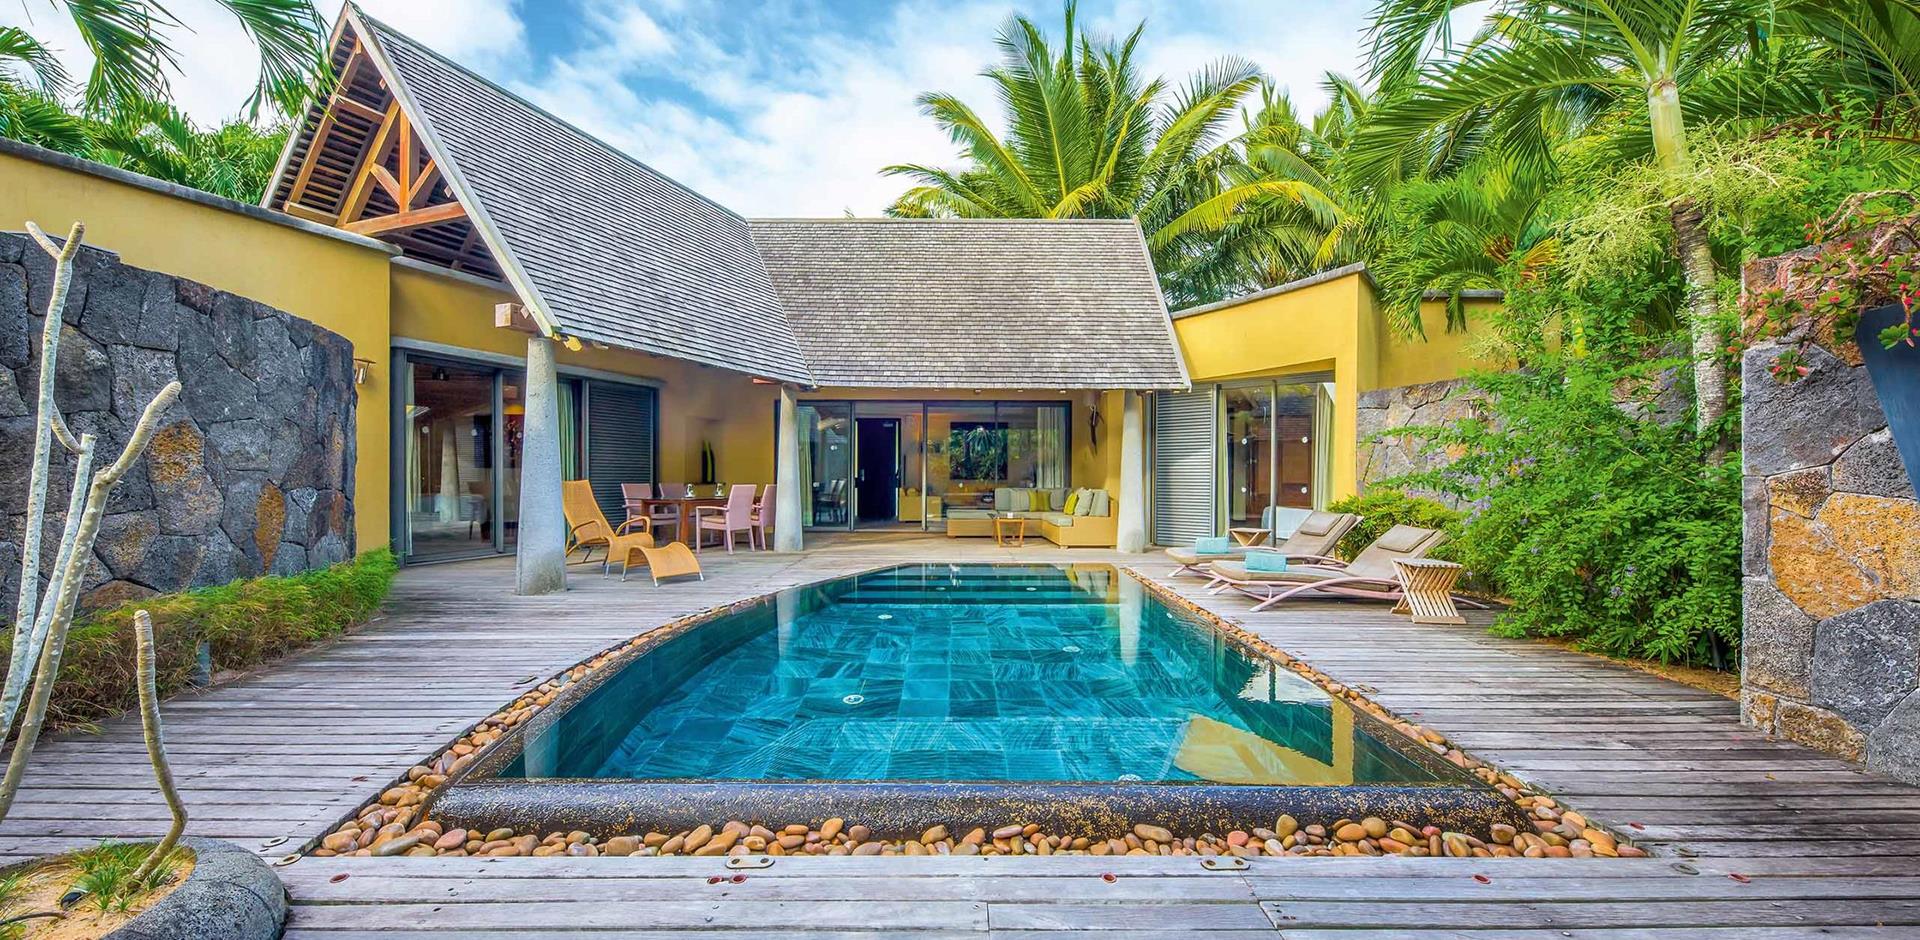 Trou Aux Biches Beachcomber Golf Resort & Spa, Mauritius, Indian Ocean, A&K